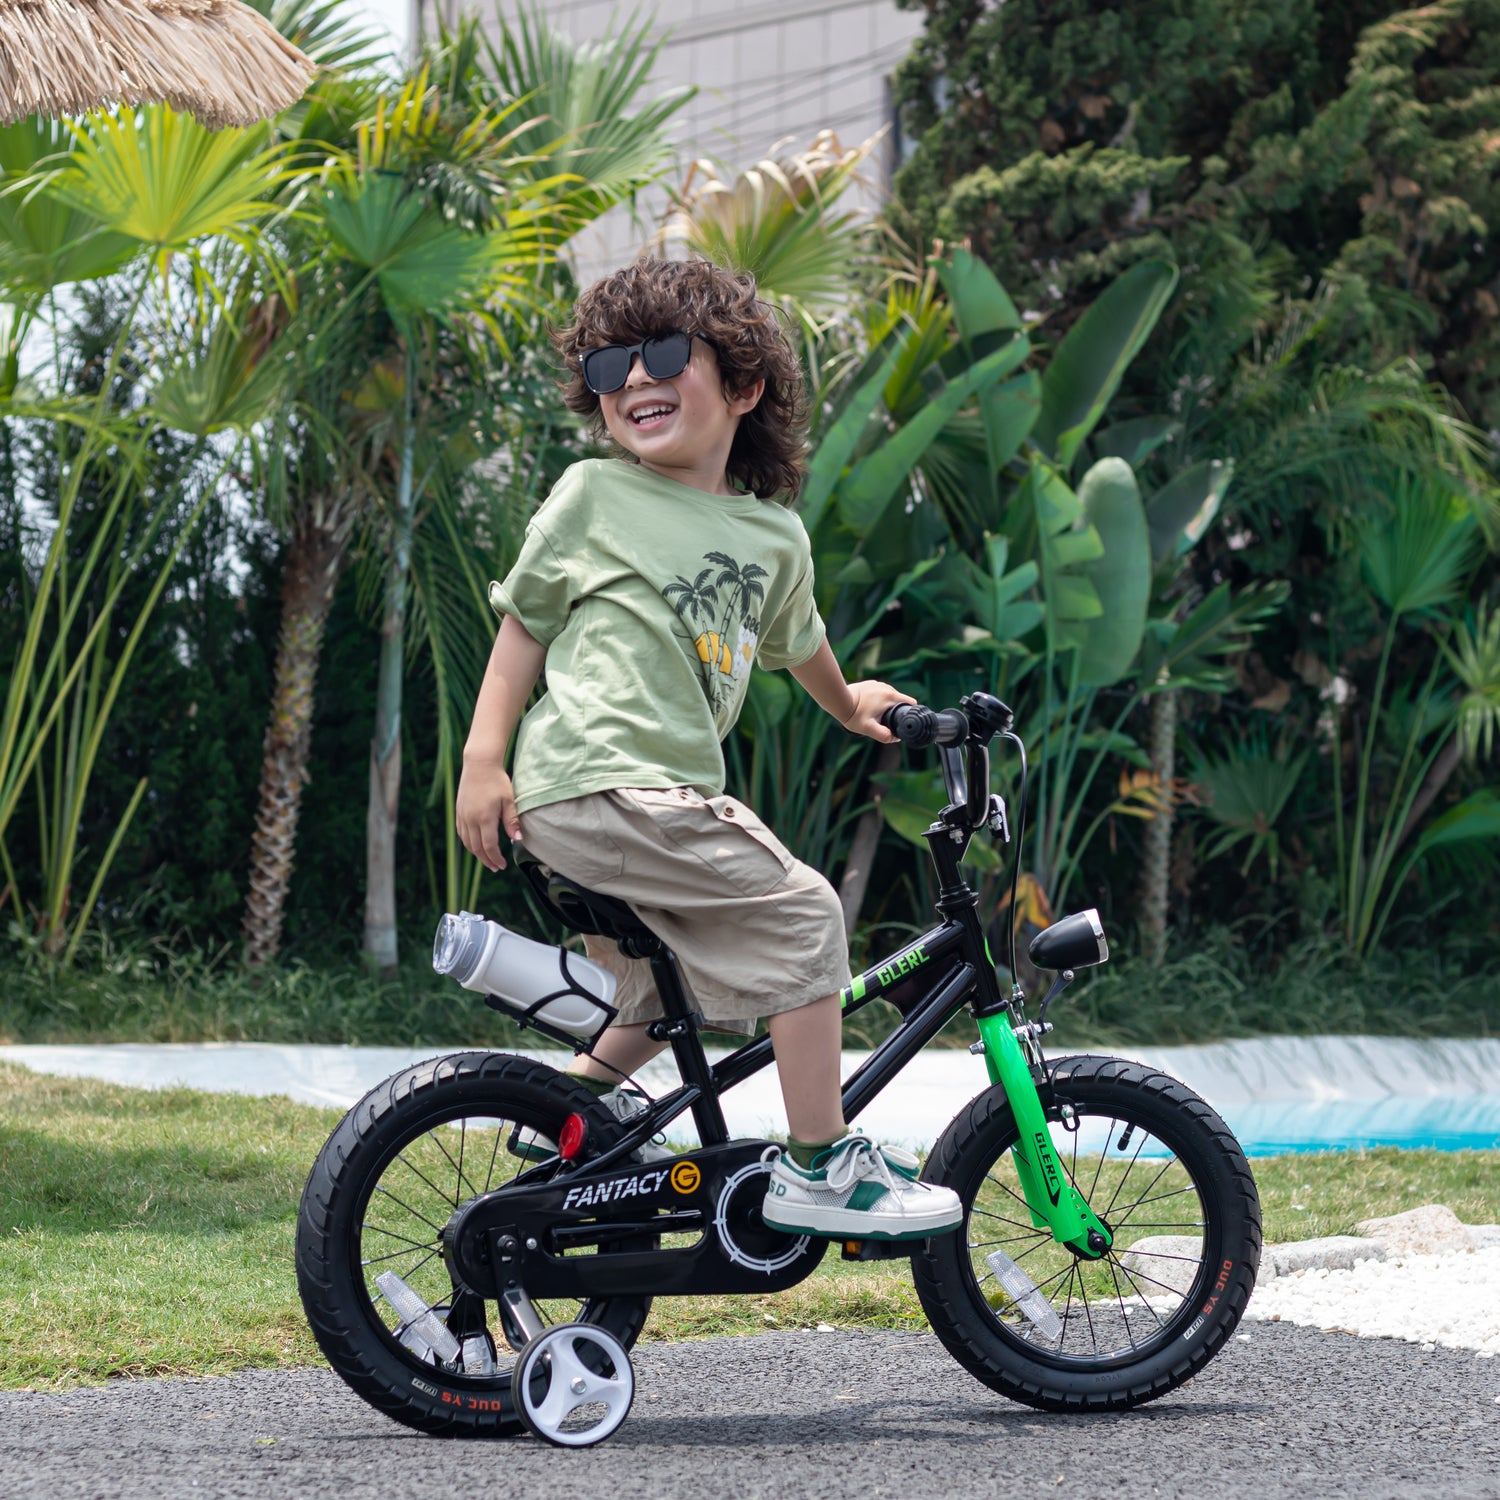 Glerc 16 inch Kids Bike for Child 4-8 Years Old Boys & Girls, Black, Size: 16 inch with Trainwheels